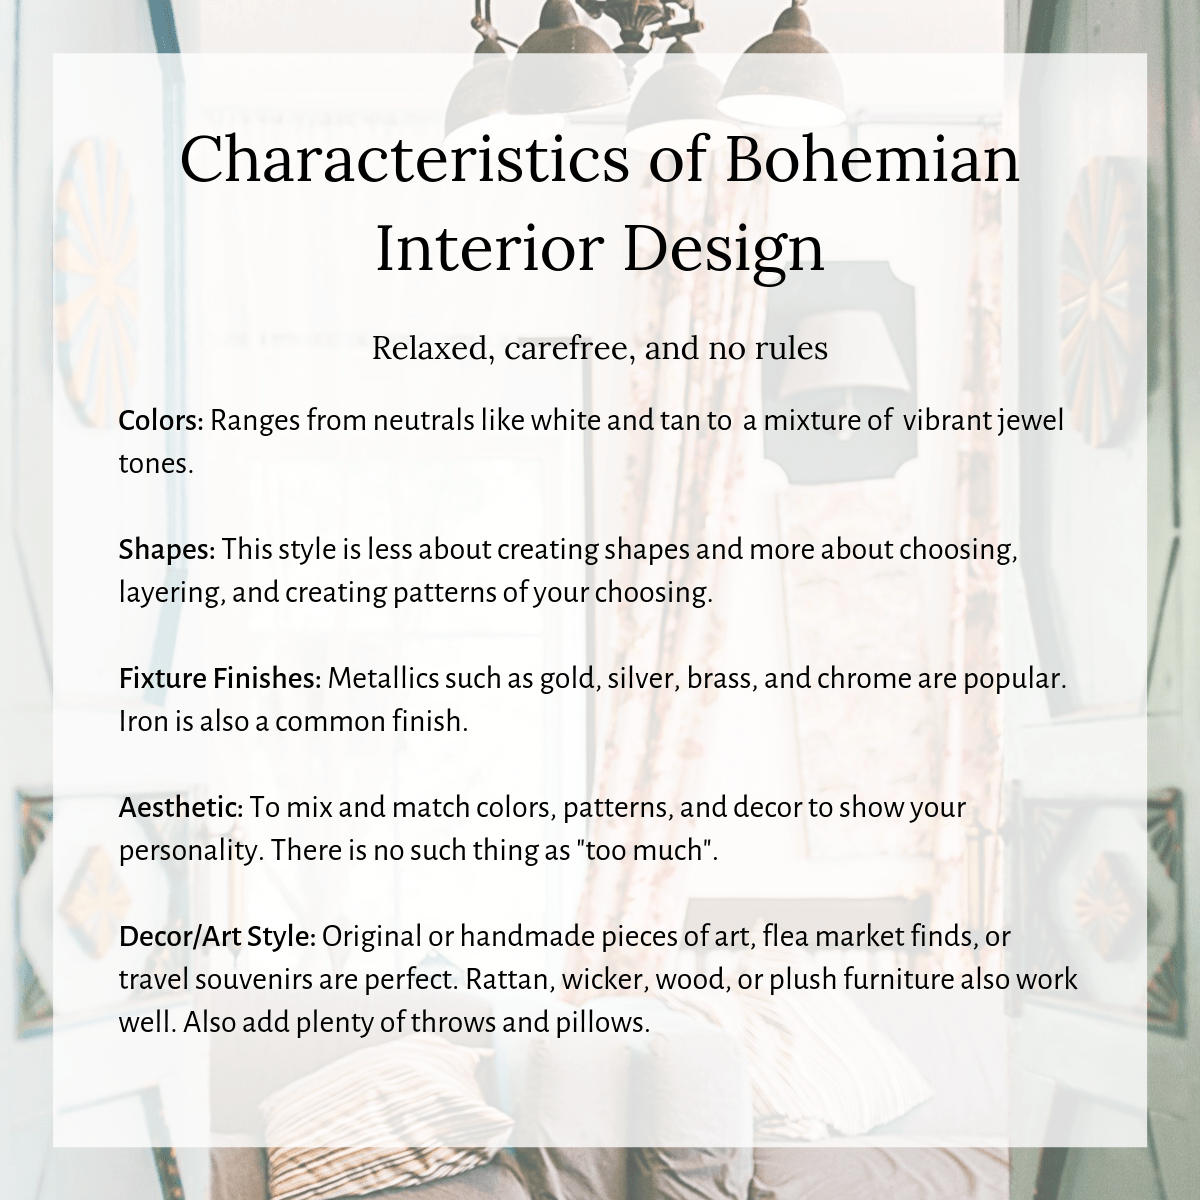 Characteristics of Bohemian Interior Design